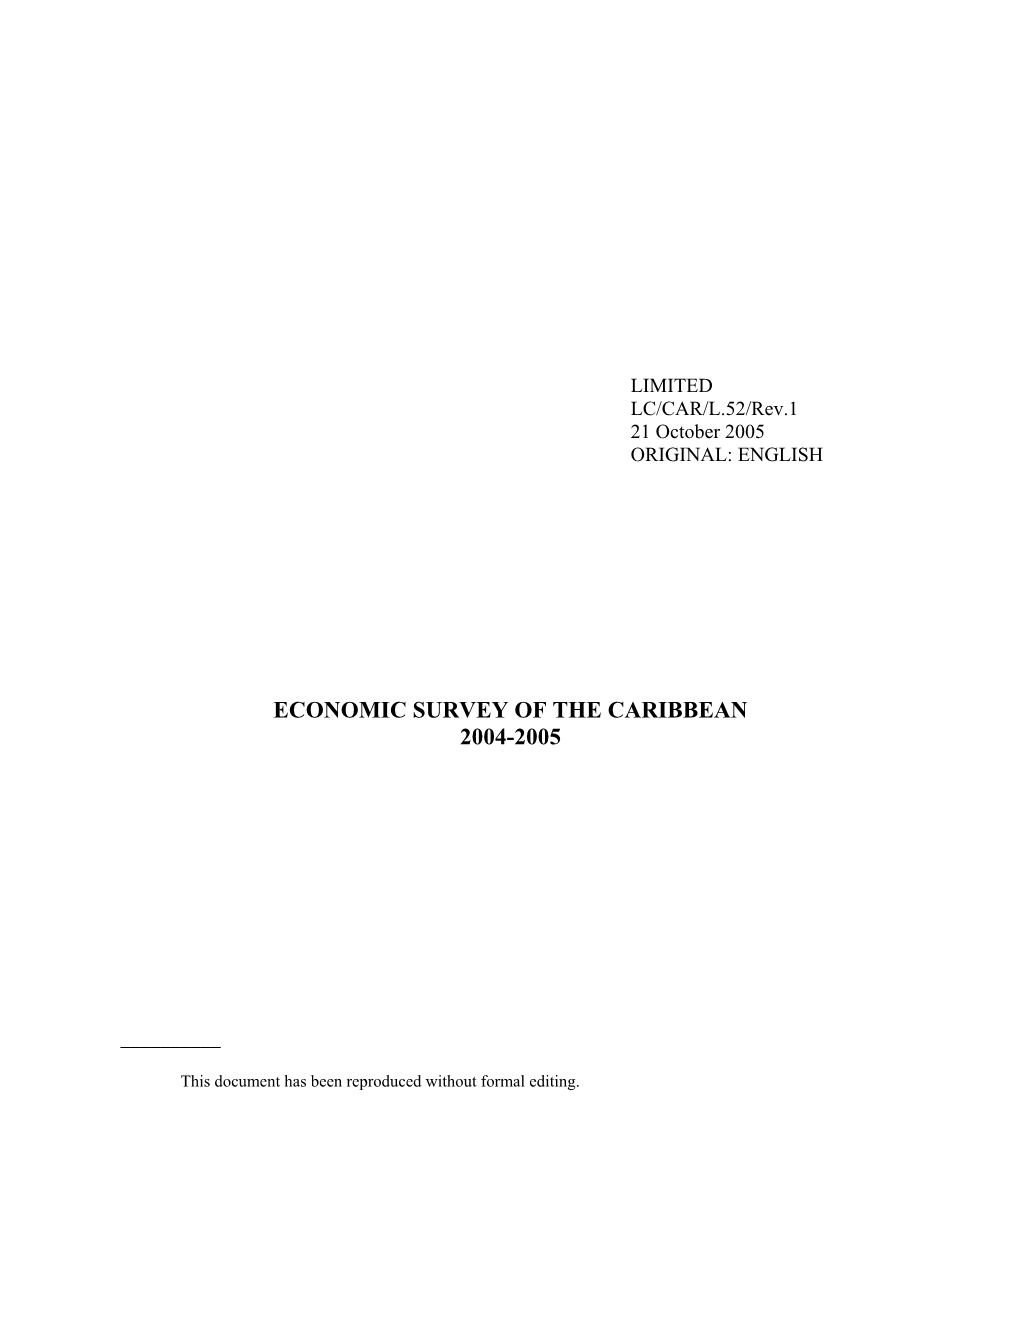 Economic Survey of the Caribbean 2004-2005